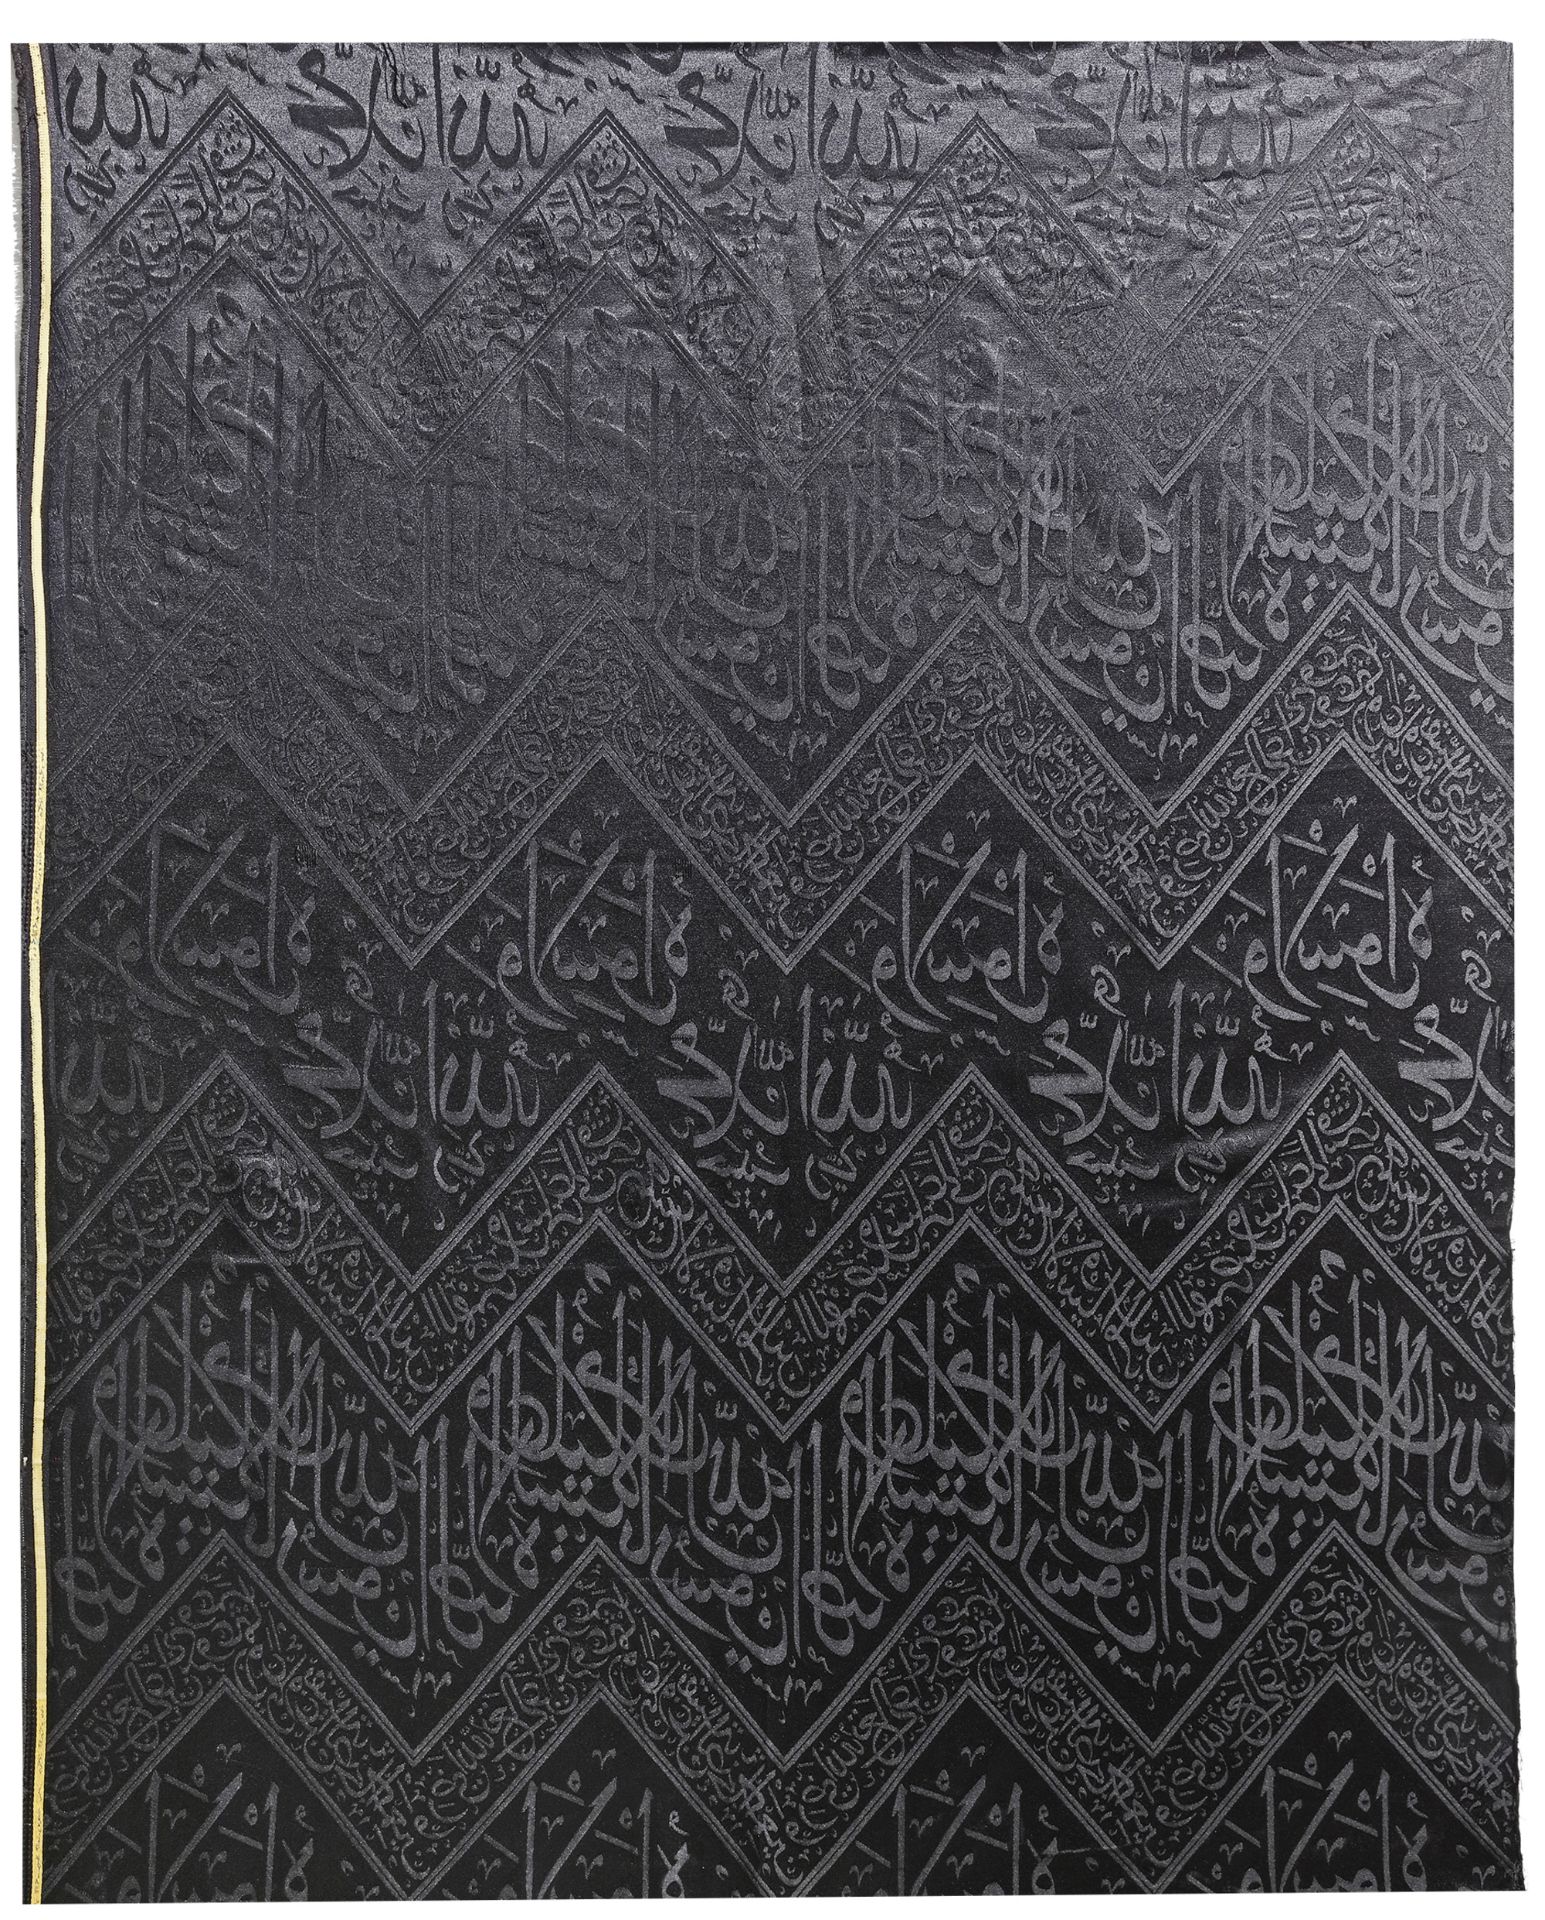 A BLACK KABAA KISWAH TEXTILE FRAGMENT, SAUDIA ARABIA, 20TH CENTURY - Image 2 of 2